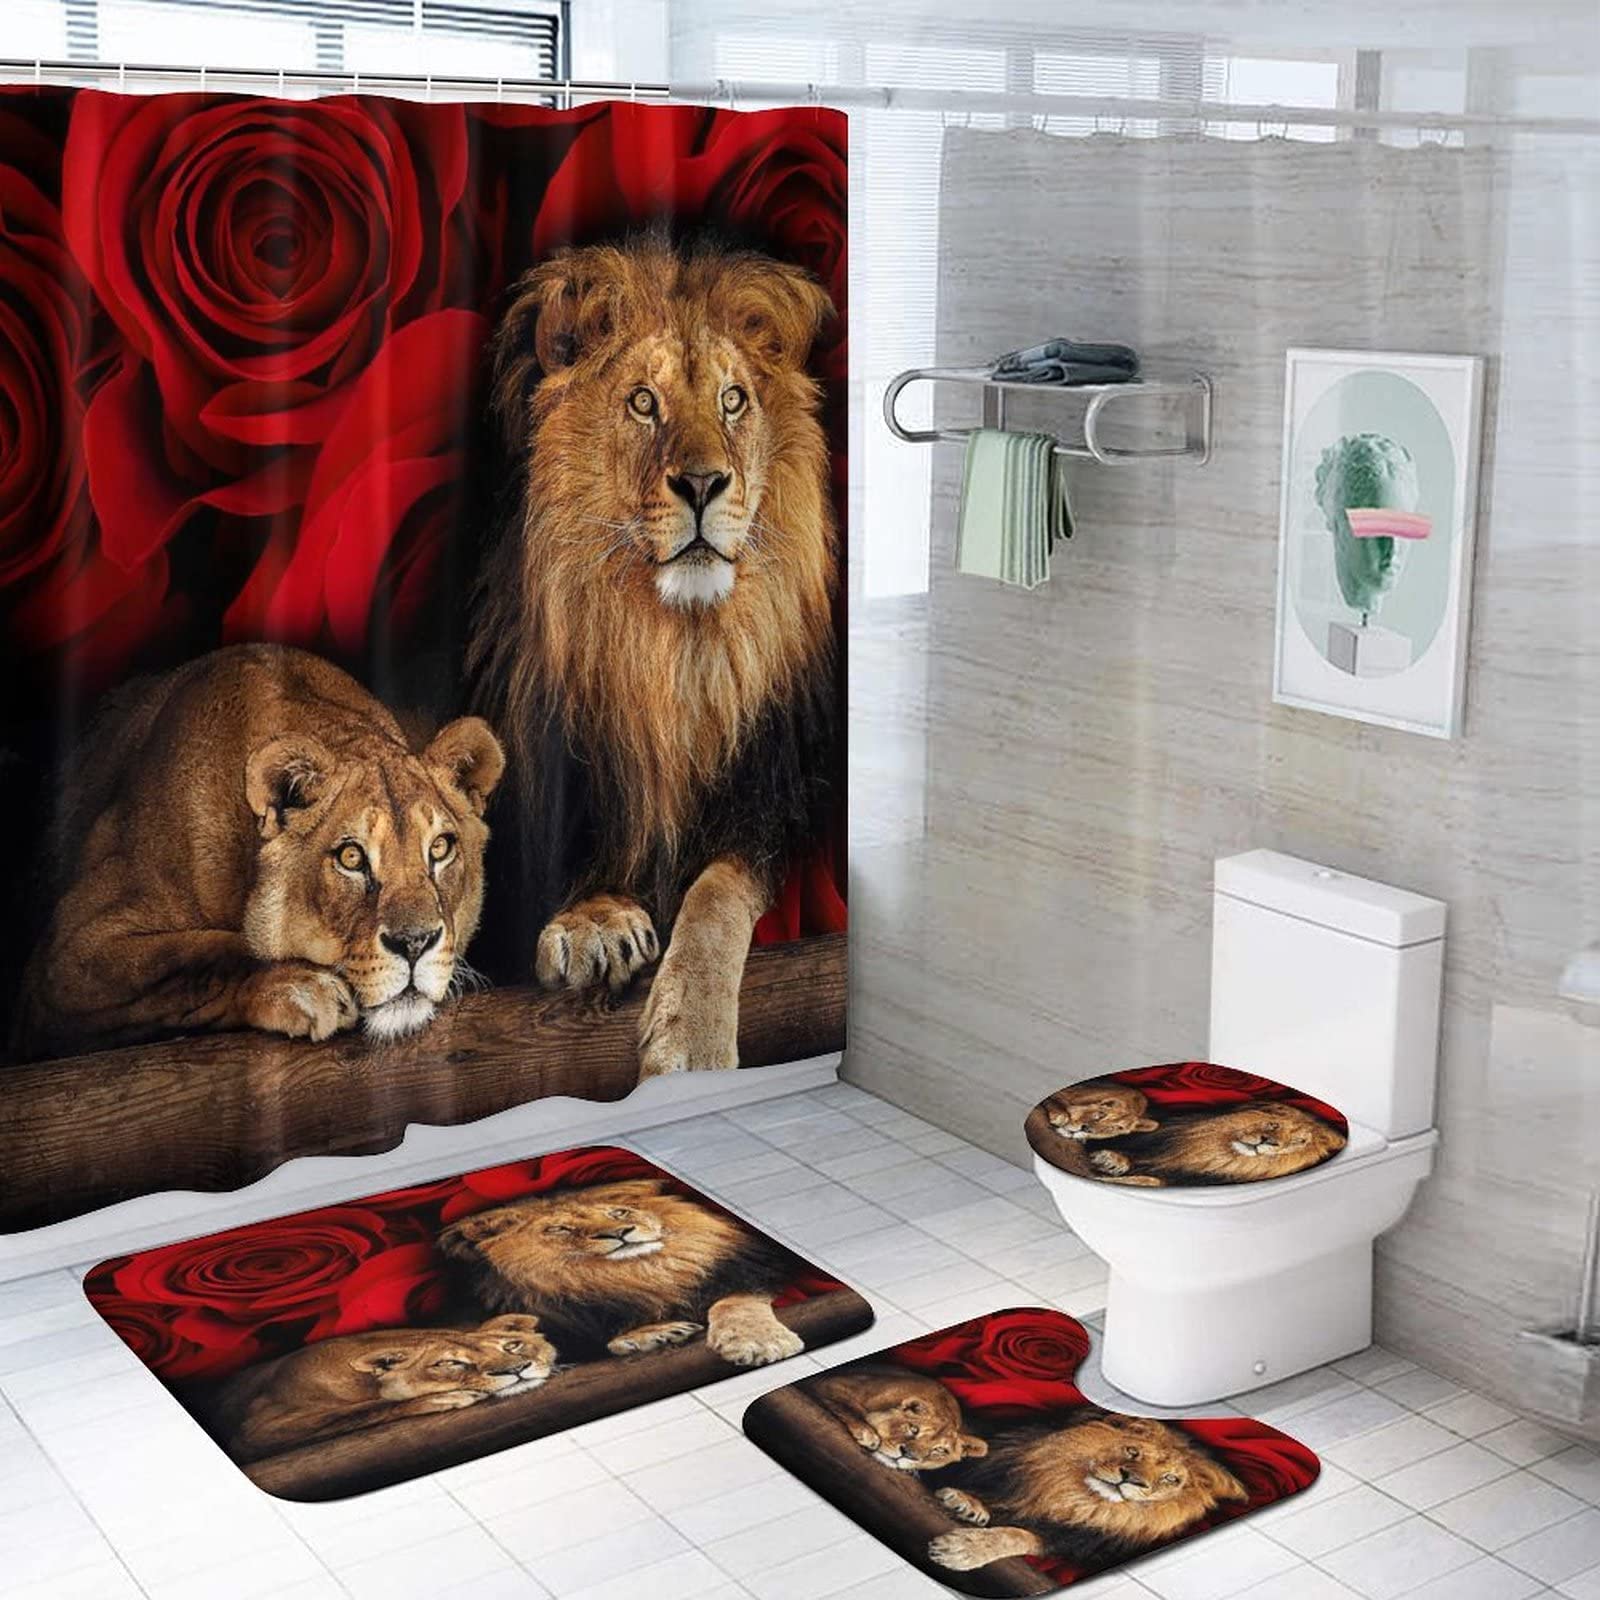 3D Rose Waterproof Shower Curtain Set Toilet Cover Mat Nonslip